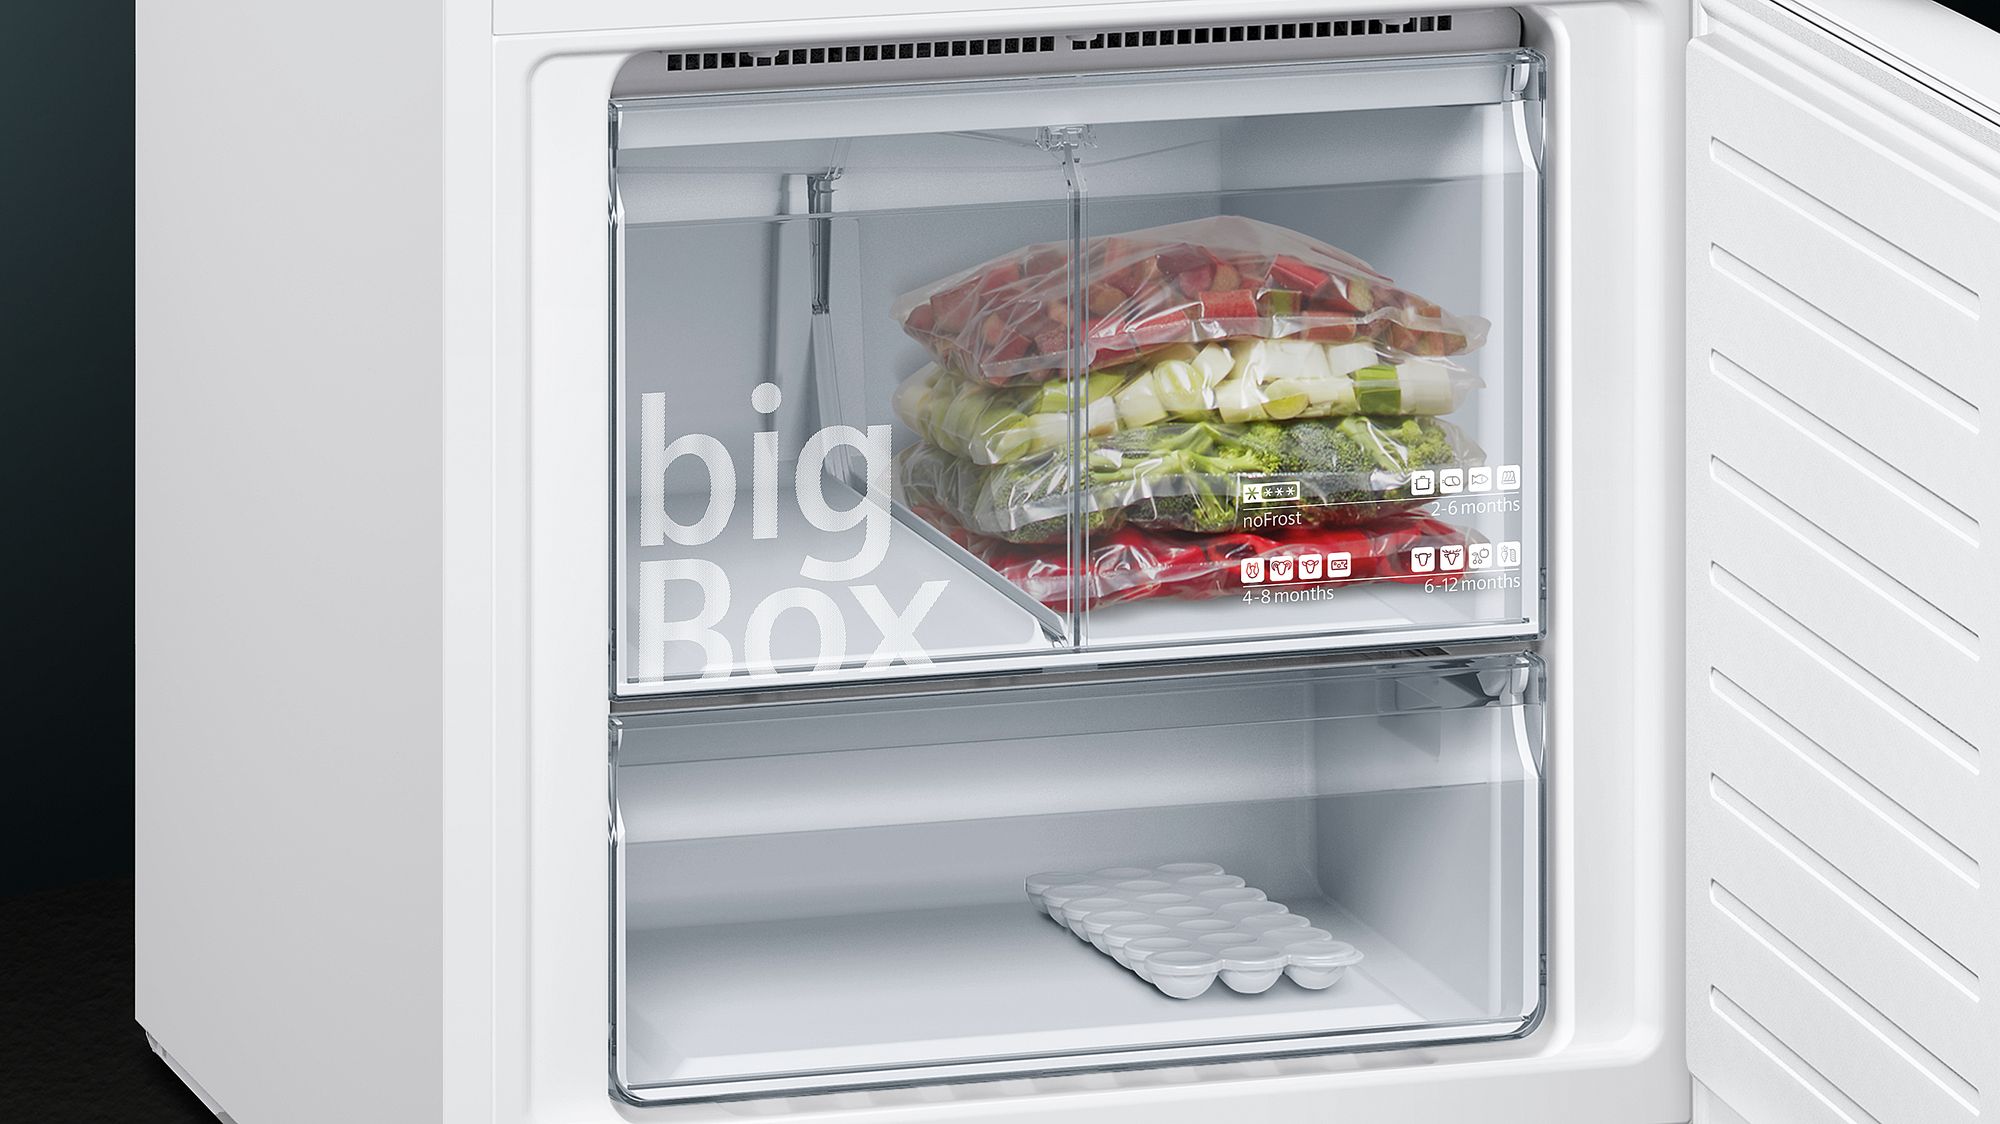 iQ300 Alttan Donduruculu Buzdolabı 193 x 70 cm Beyaz